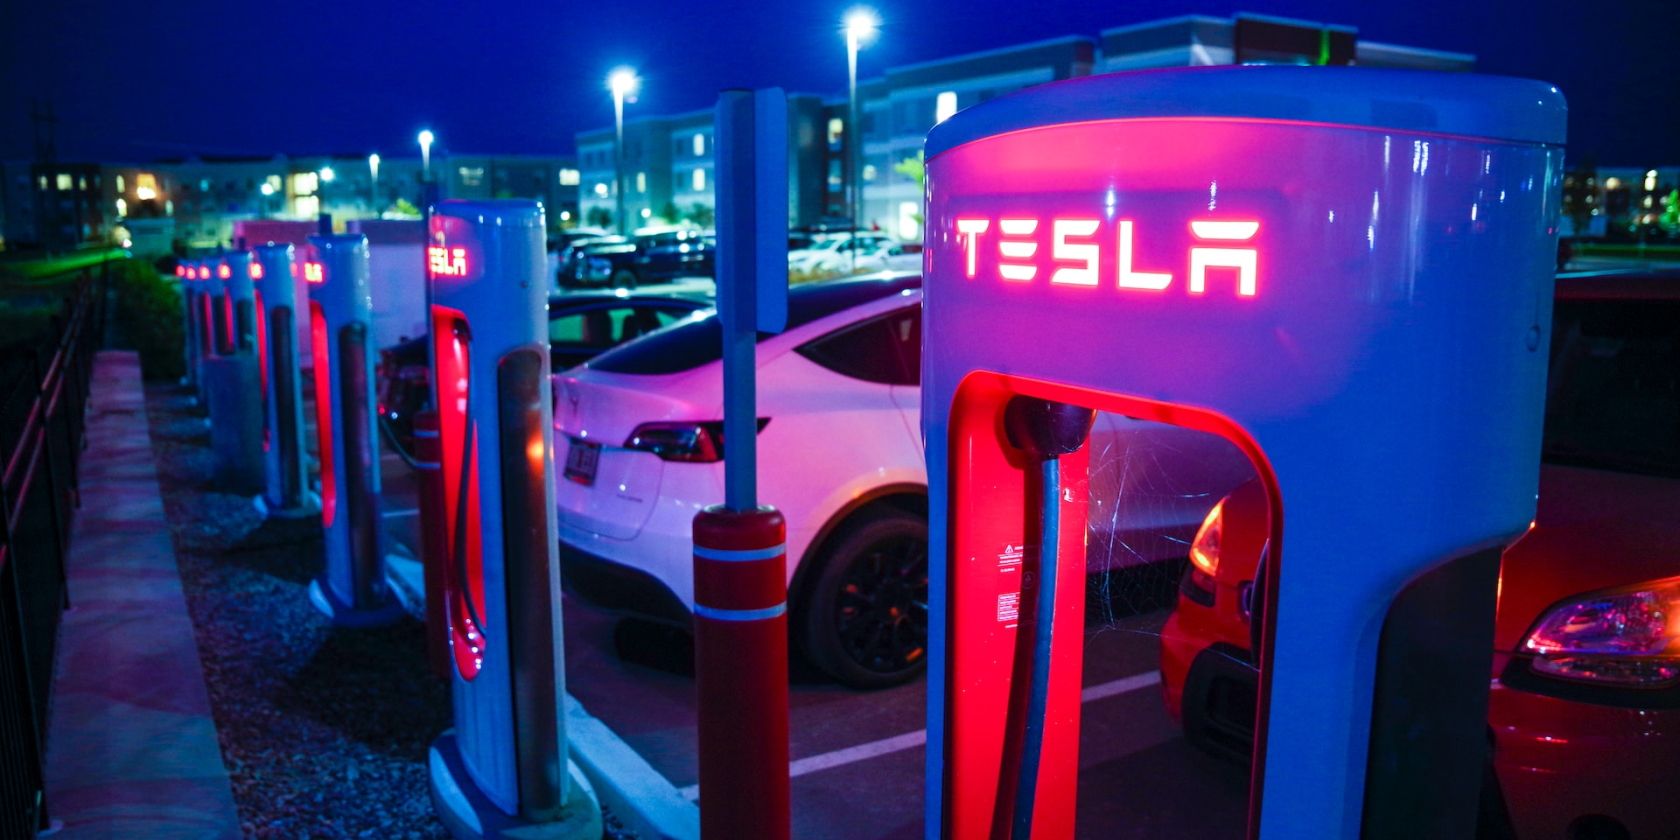 Tesla Supercharger station at night